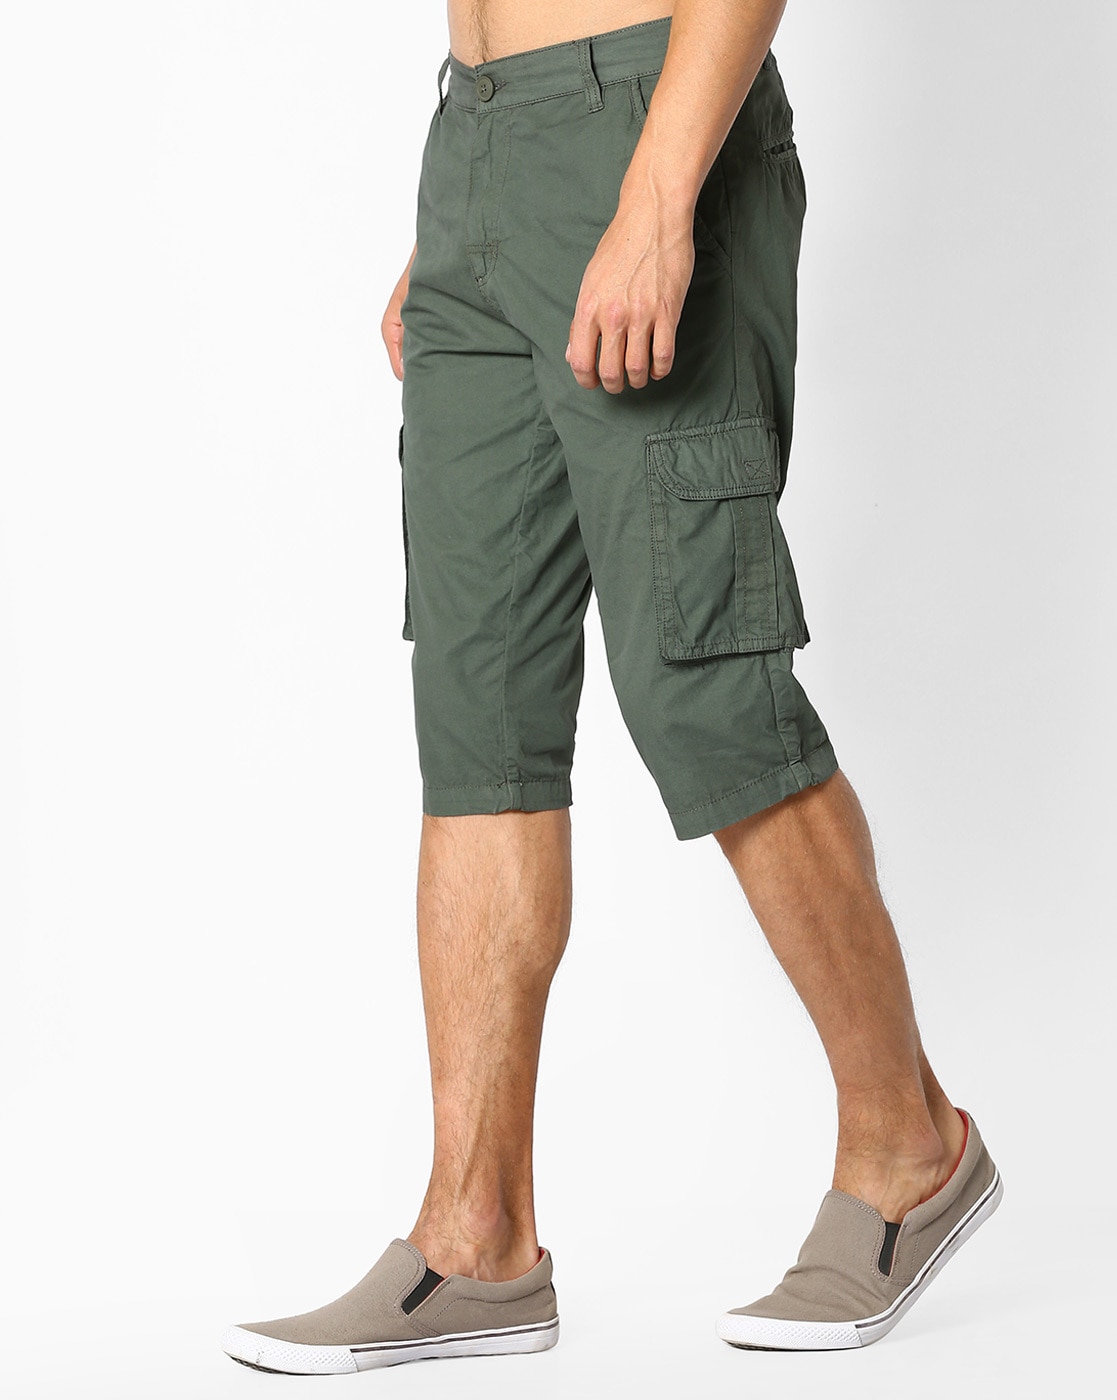 Buy Olive Green Shorts  34ths for Men by Teamspirit Online  Ajiocom